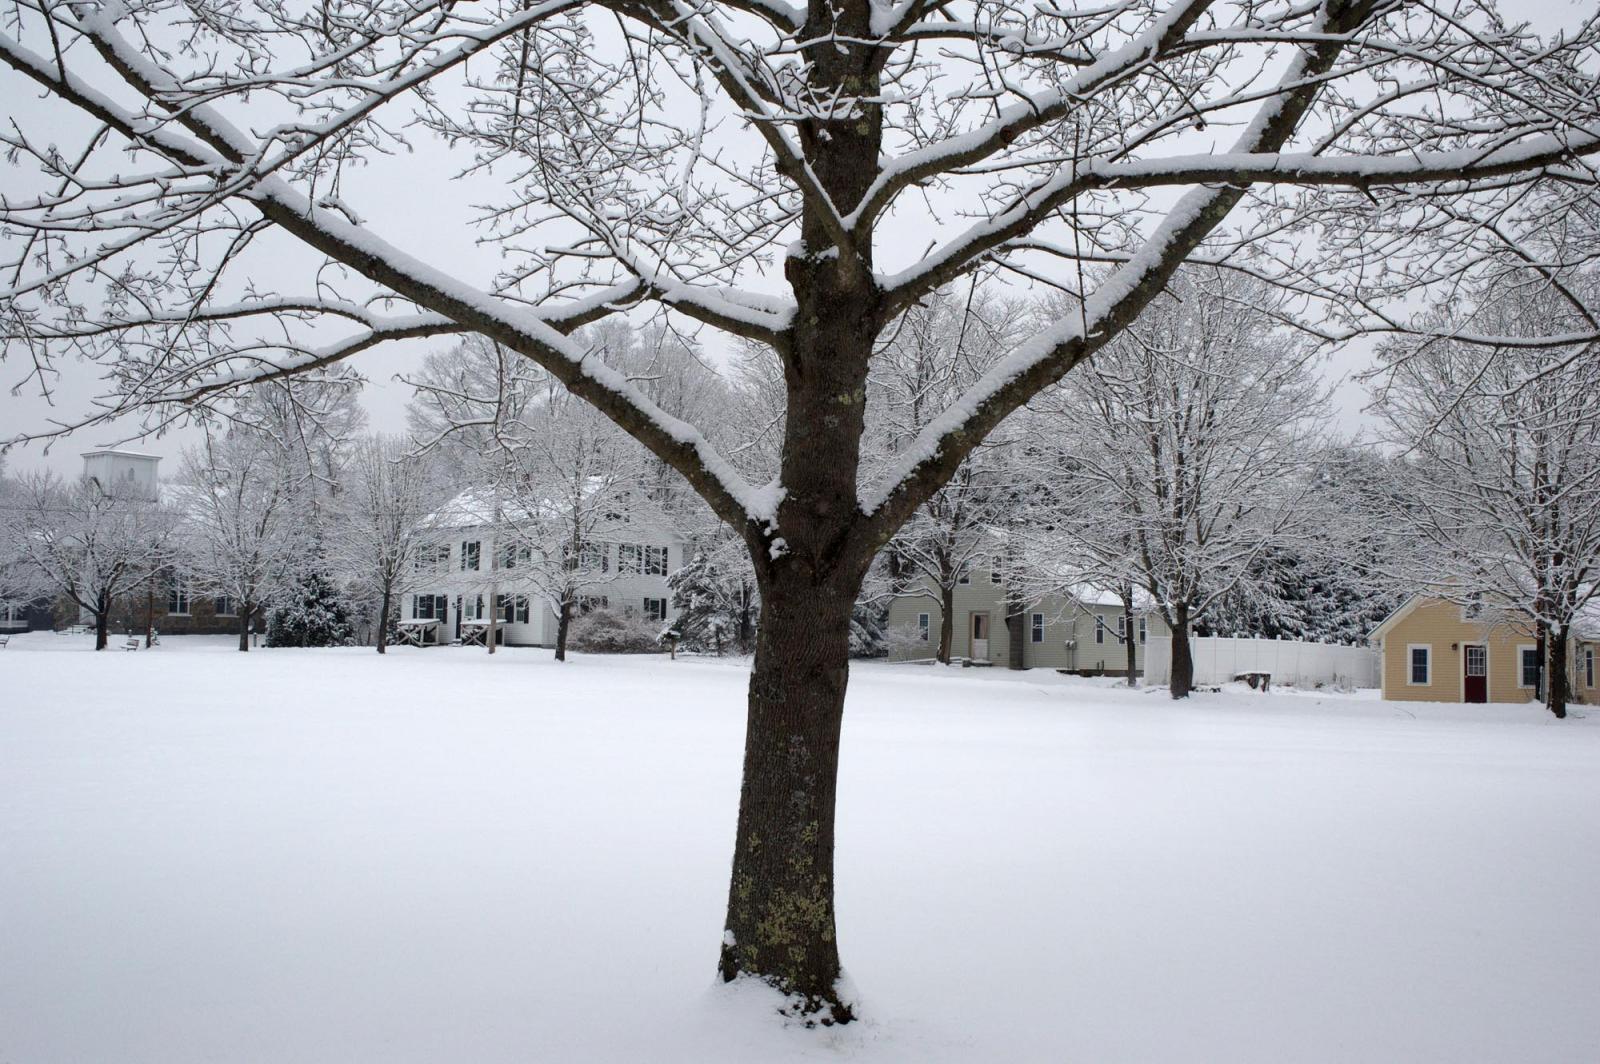 The Common. Drewsville, New Hampshire, USA. December 2013.